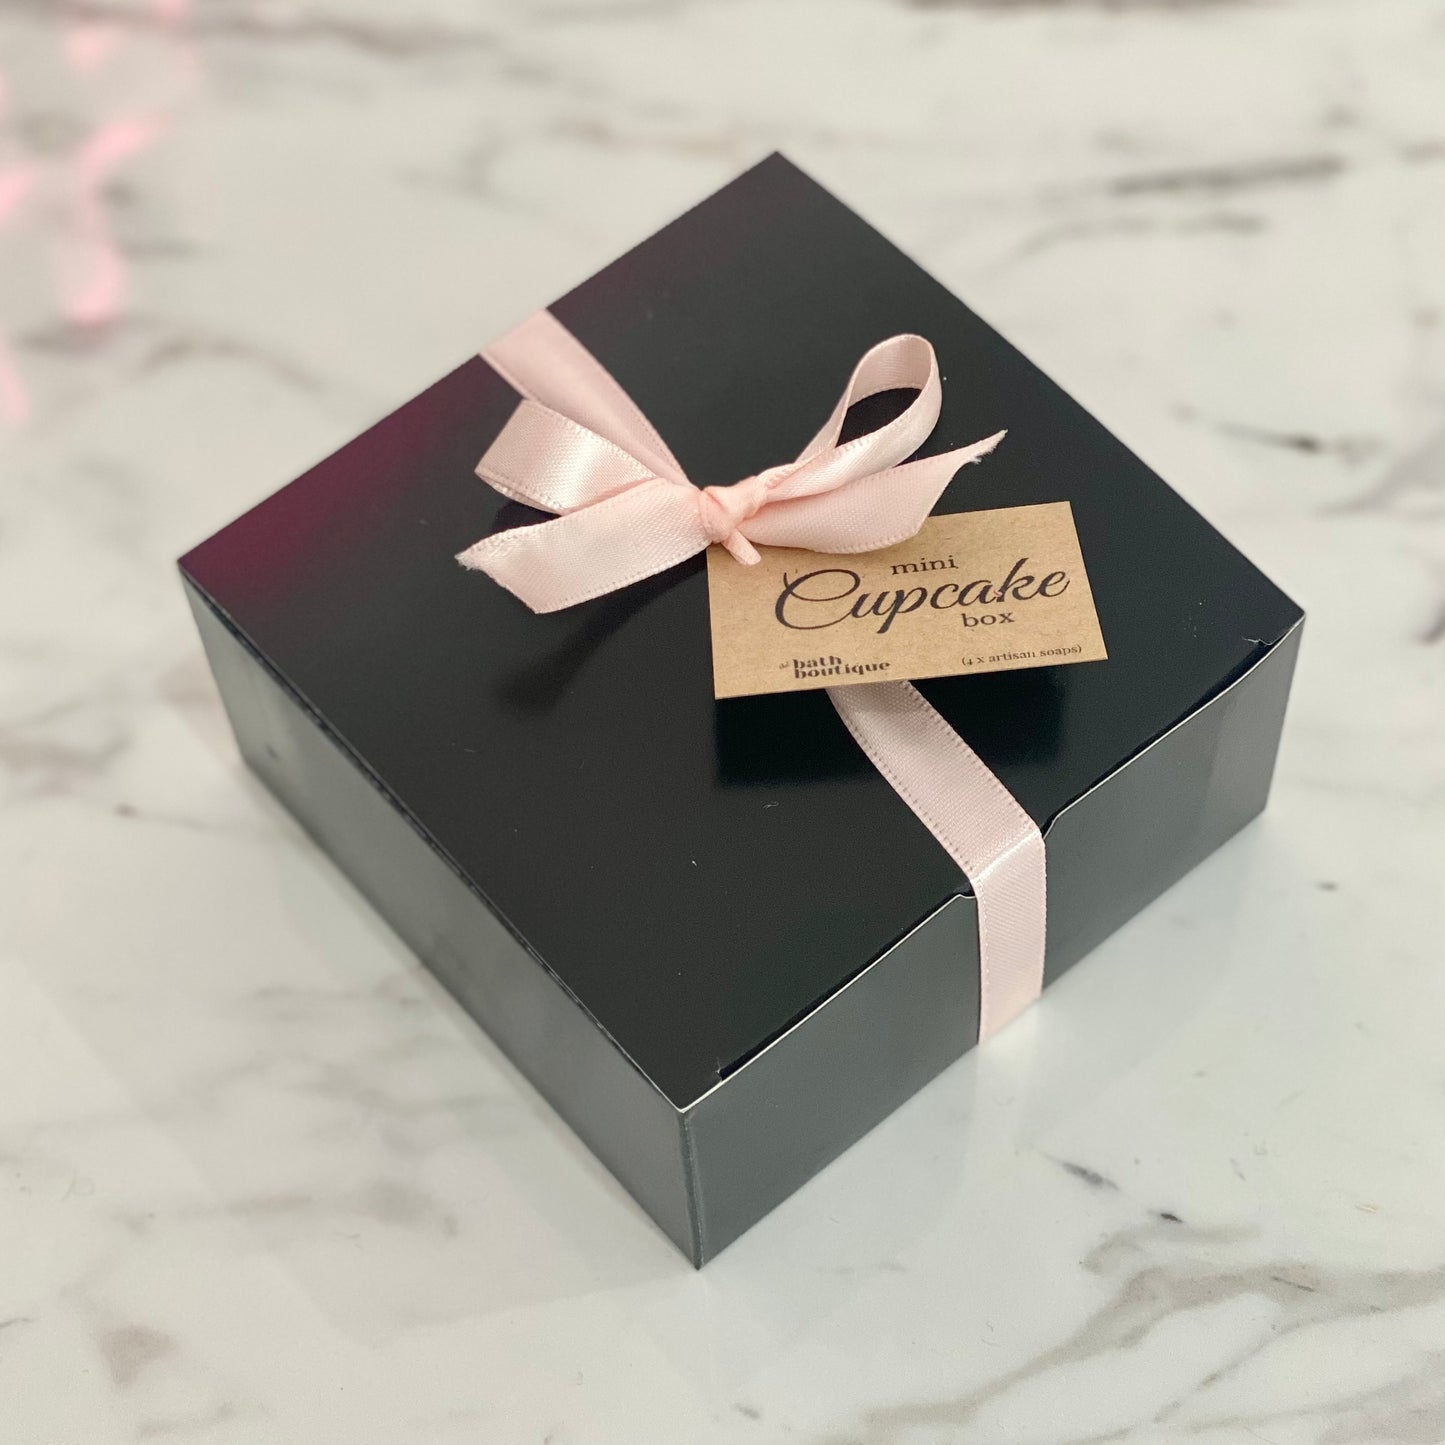 Mini Cupcake Gift Box